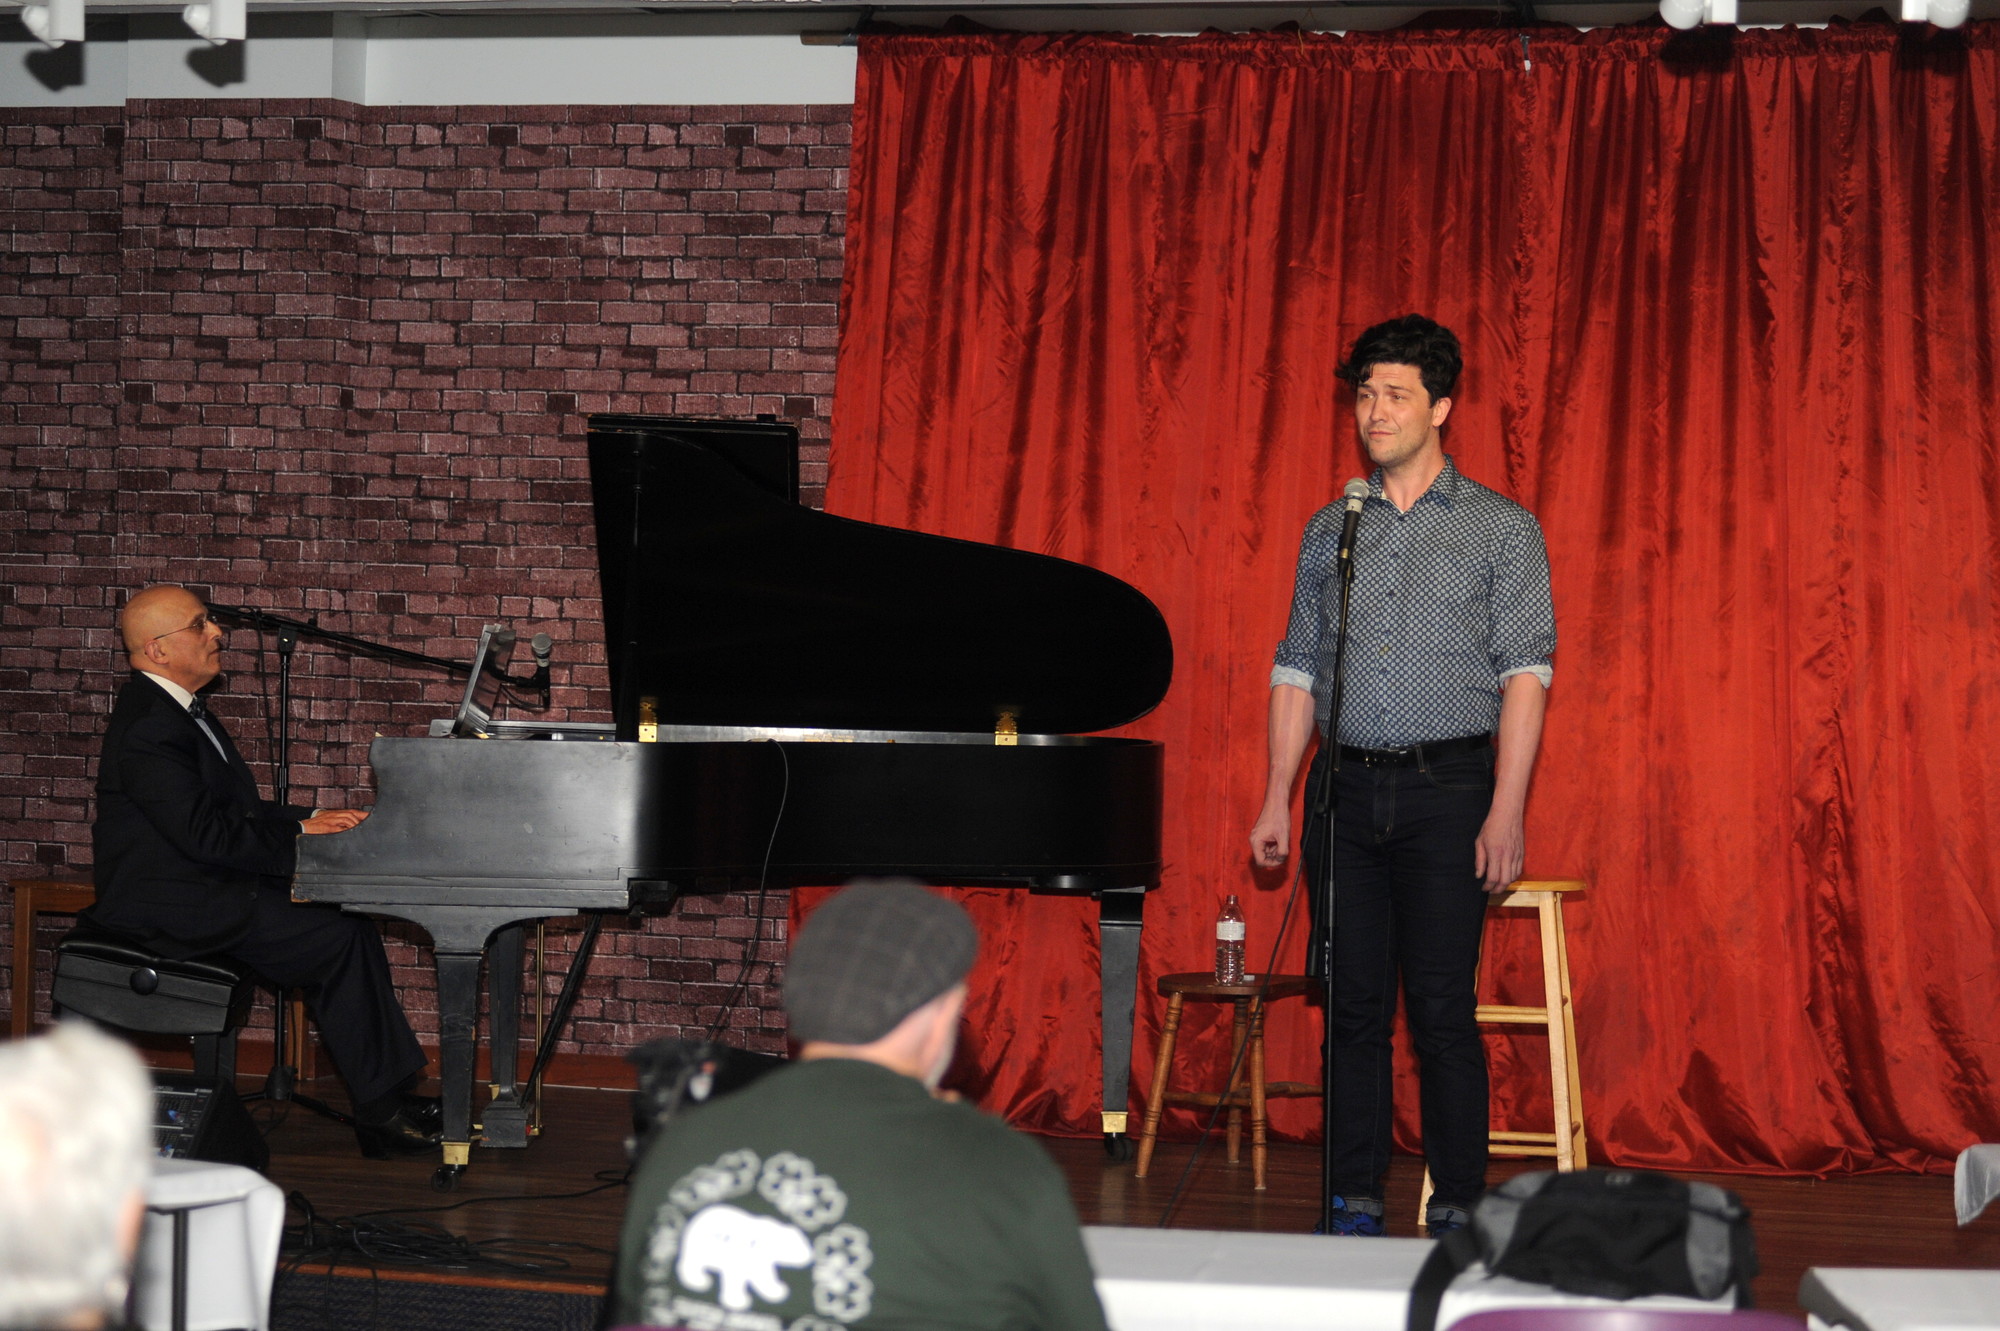 Joshua Dixon with pianist Steve Kaplan.